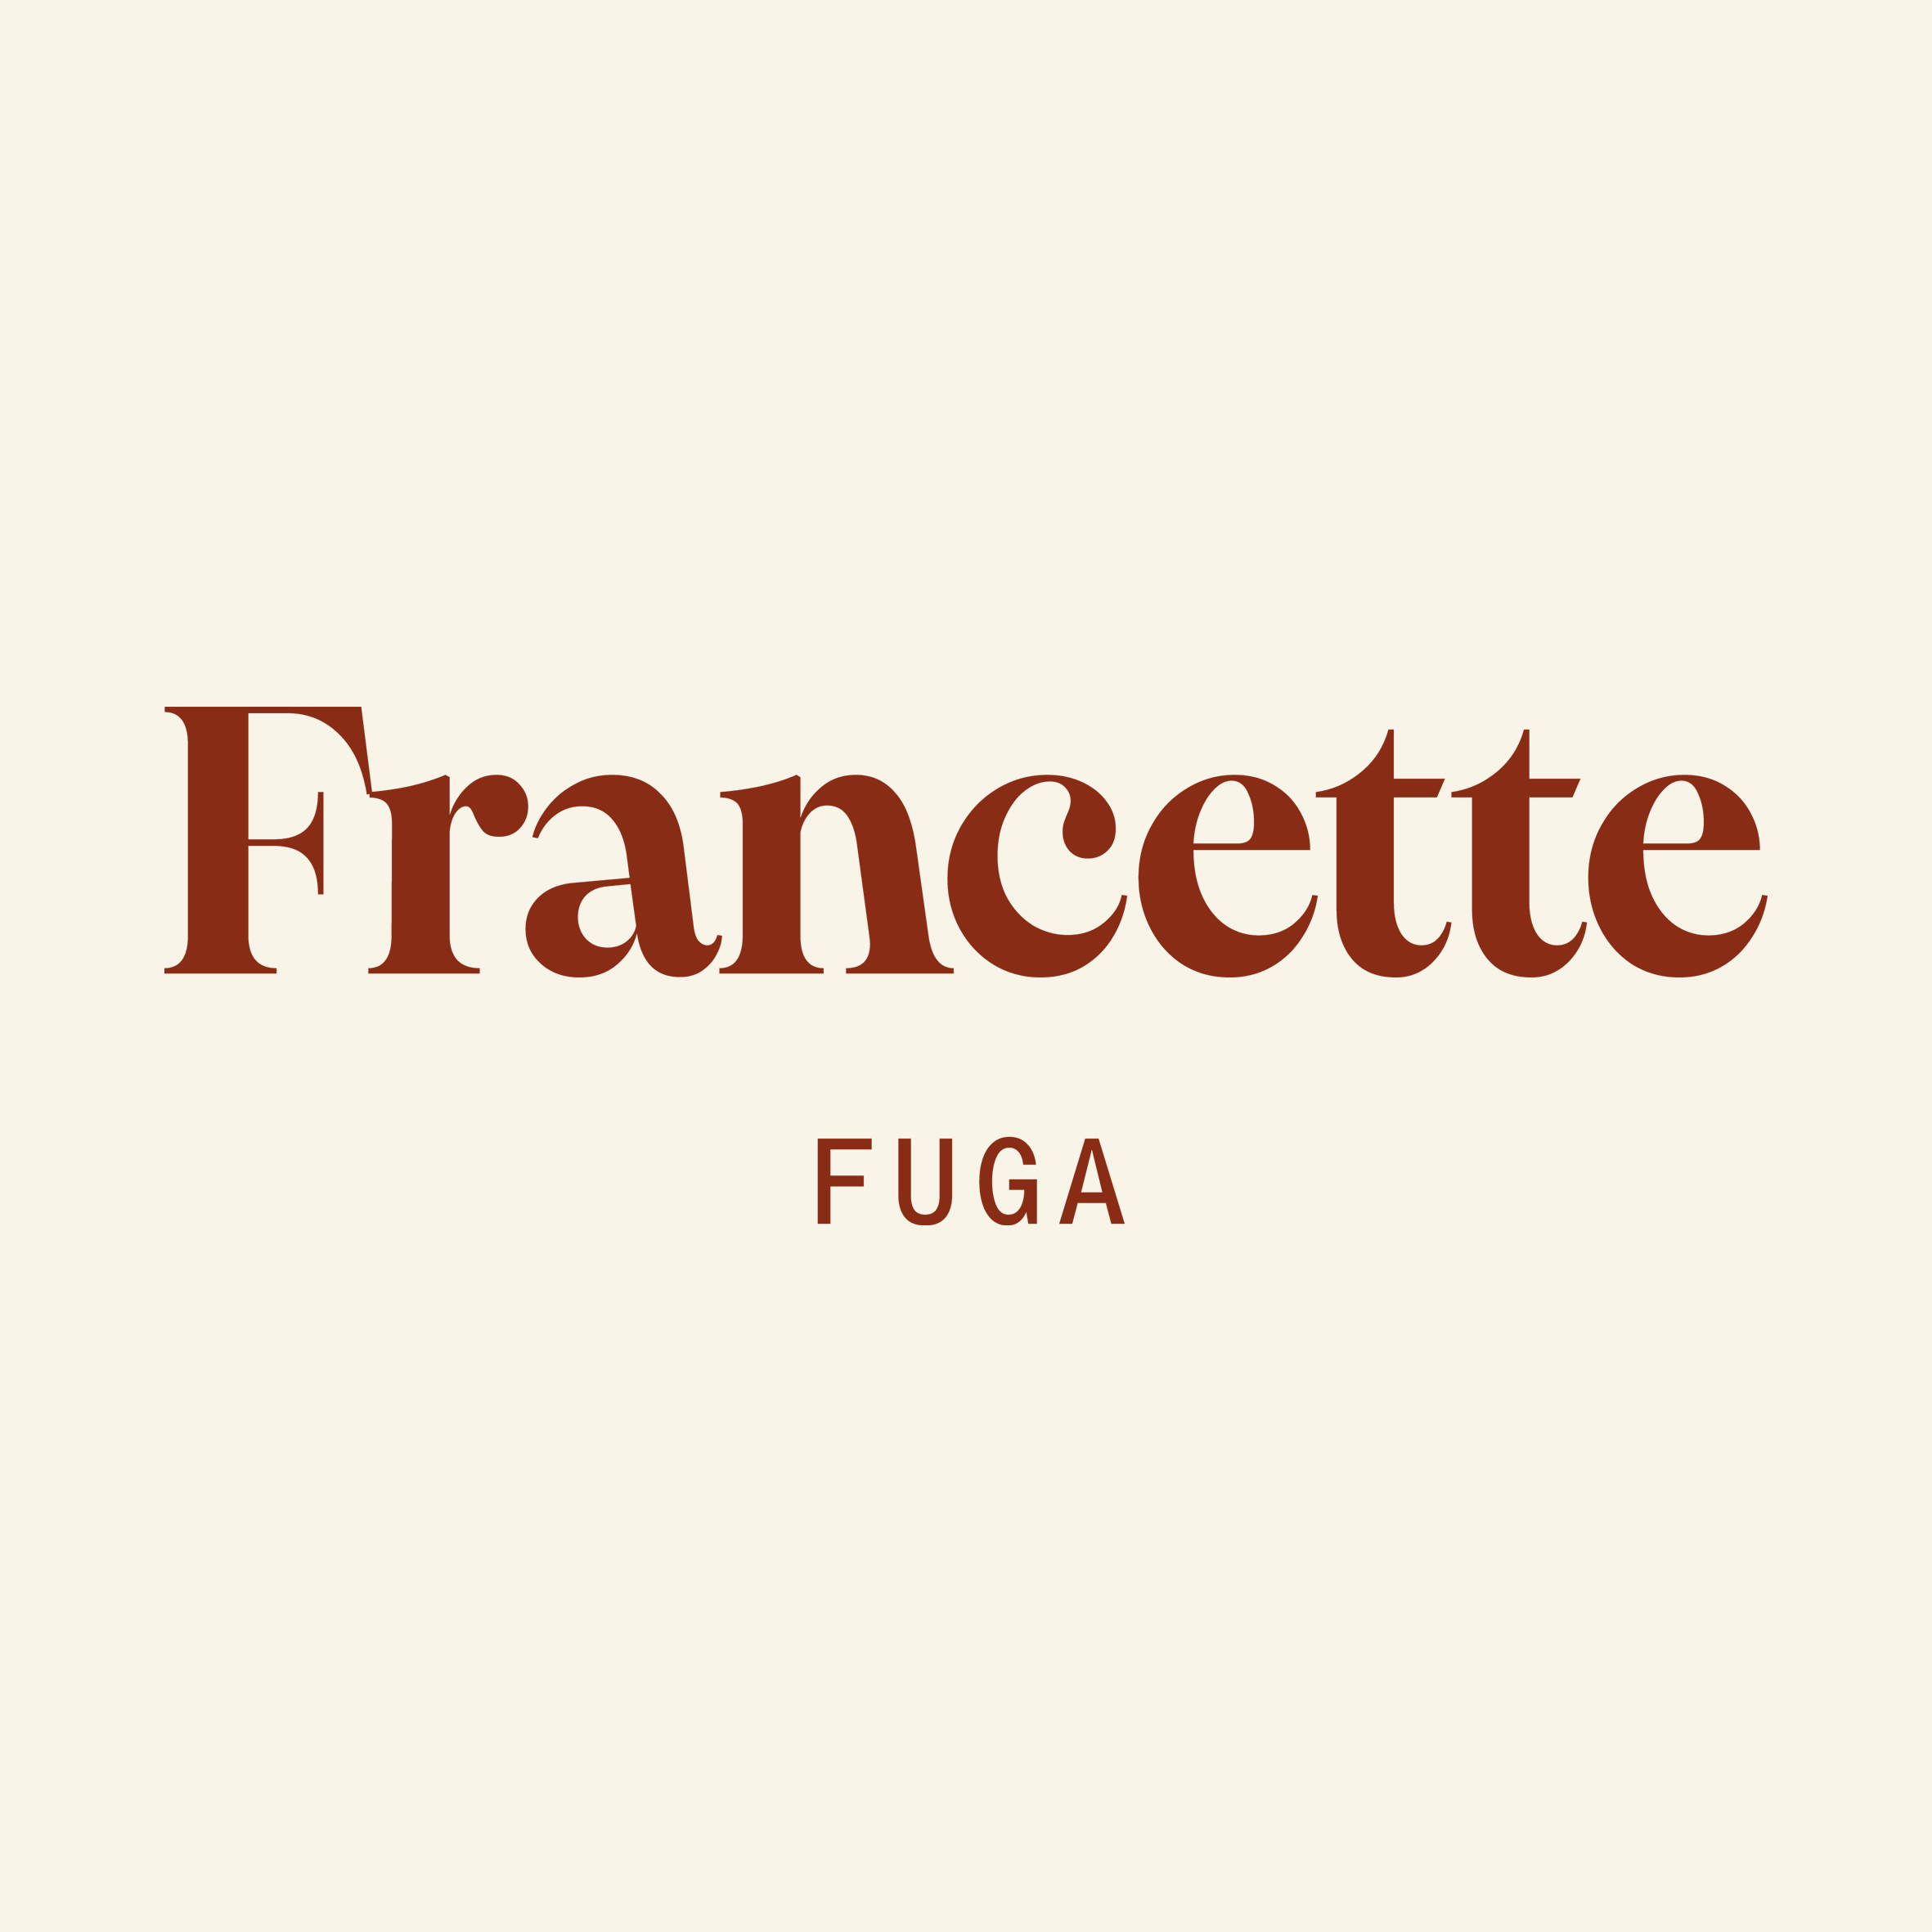 Francette